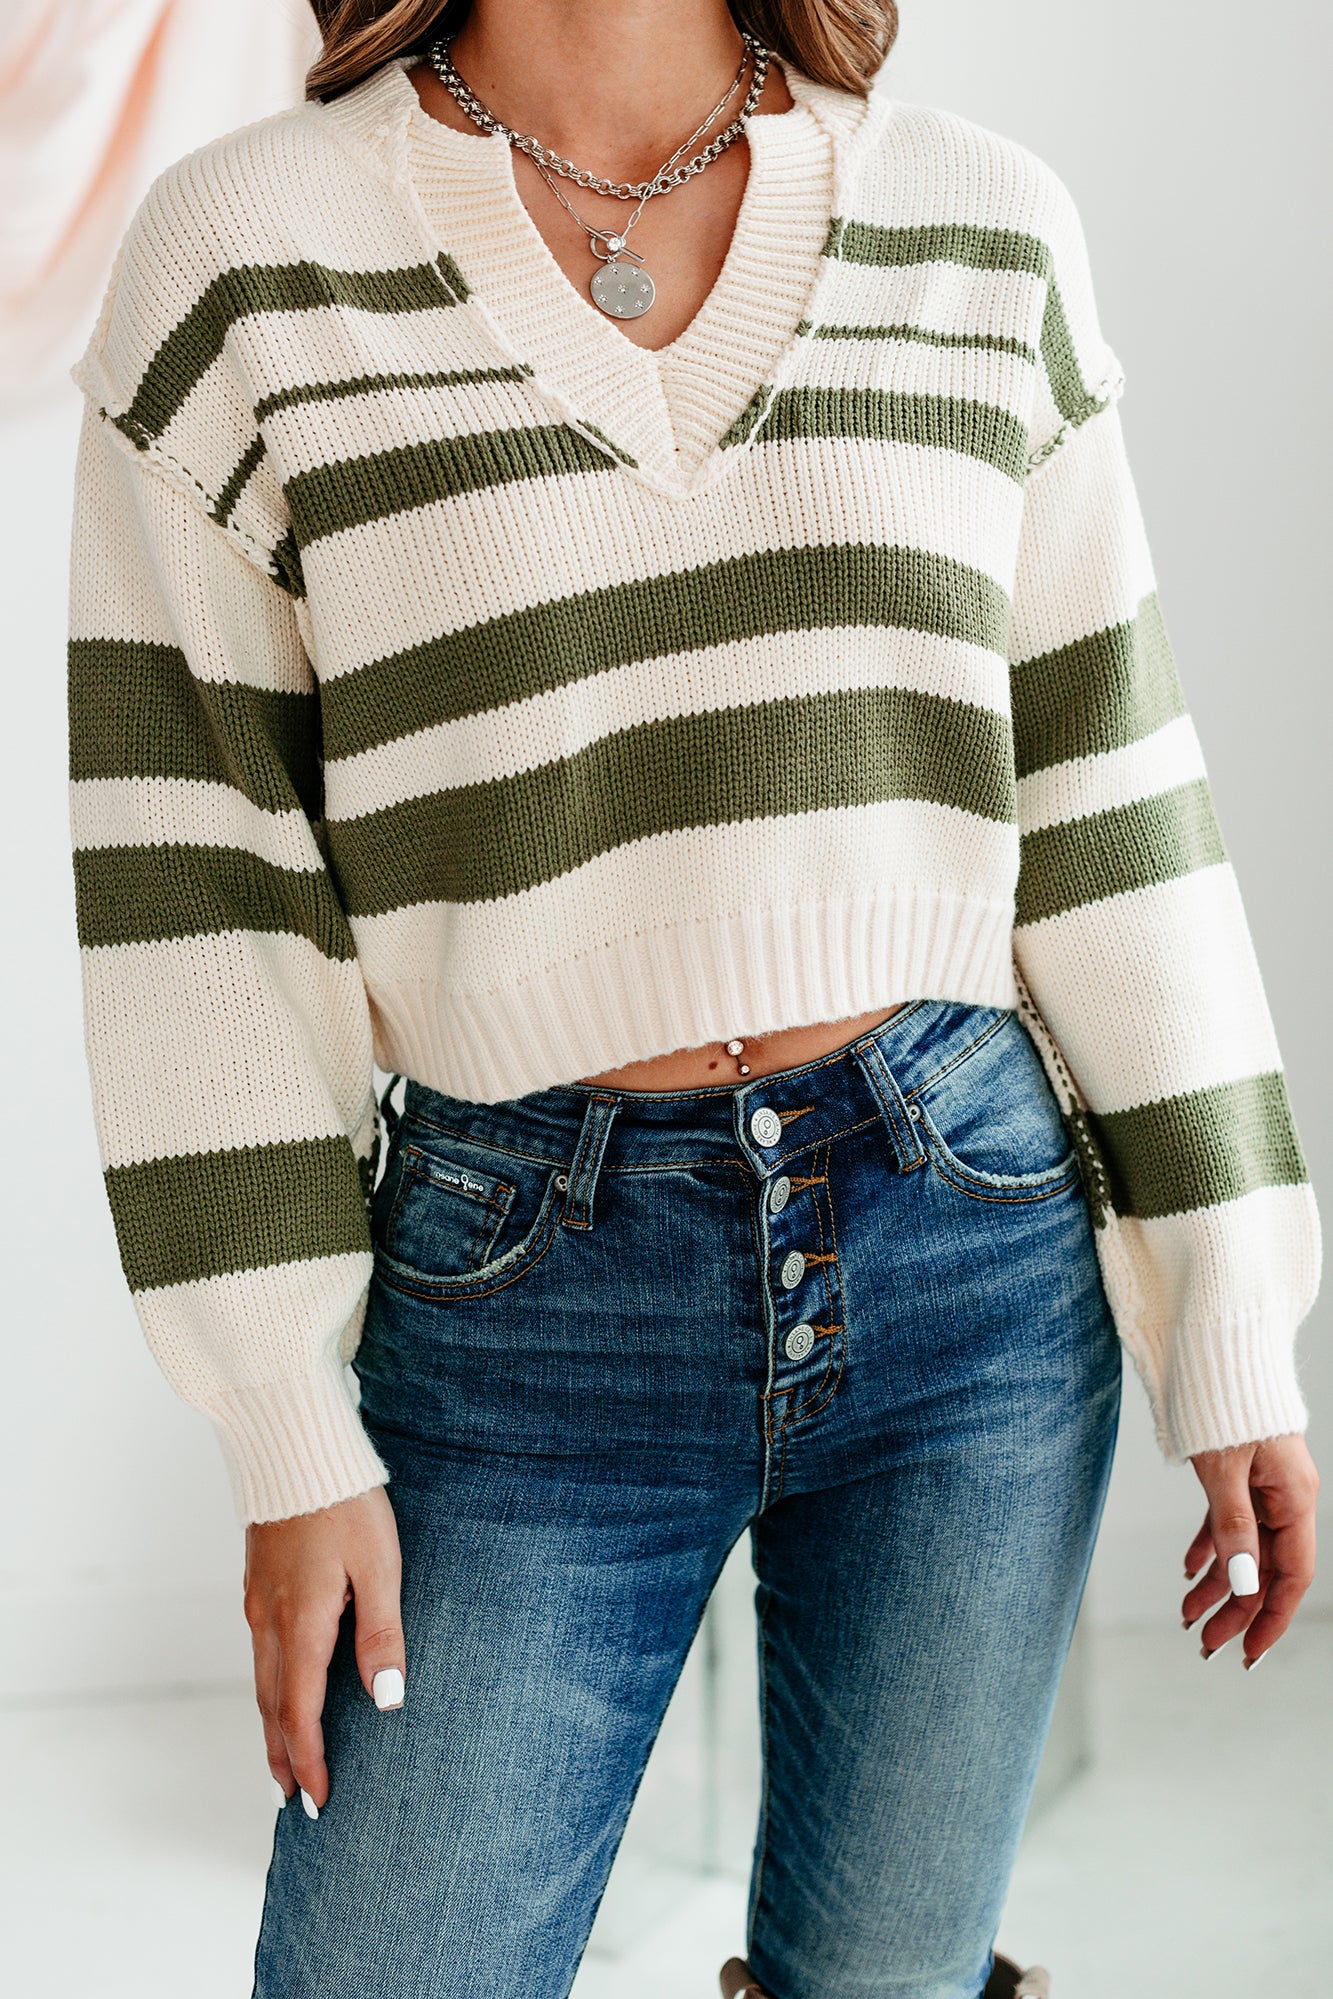 Agreeable Attitude Striped Cropped Sweater (Olive) - NanaMacs